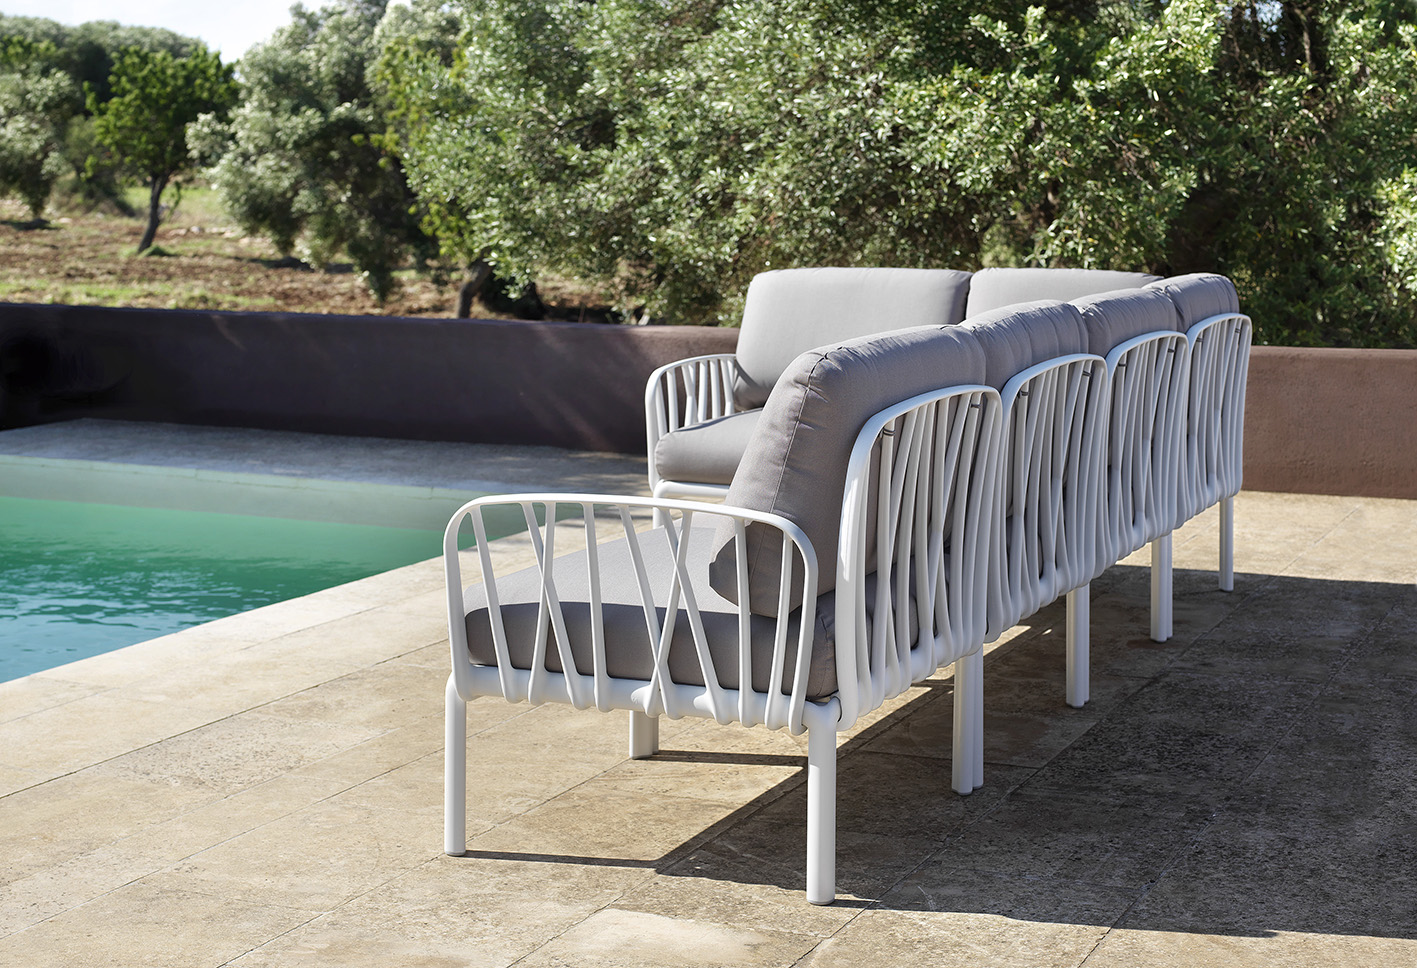 Komodo Modular Outdoor Sofa Poolside gray cushions on white